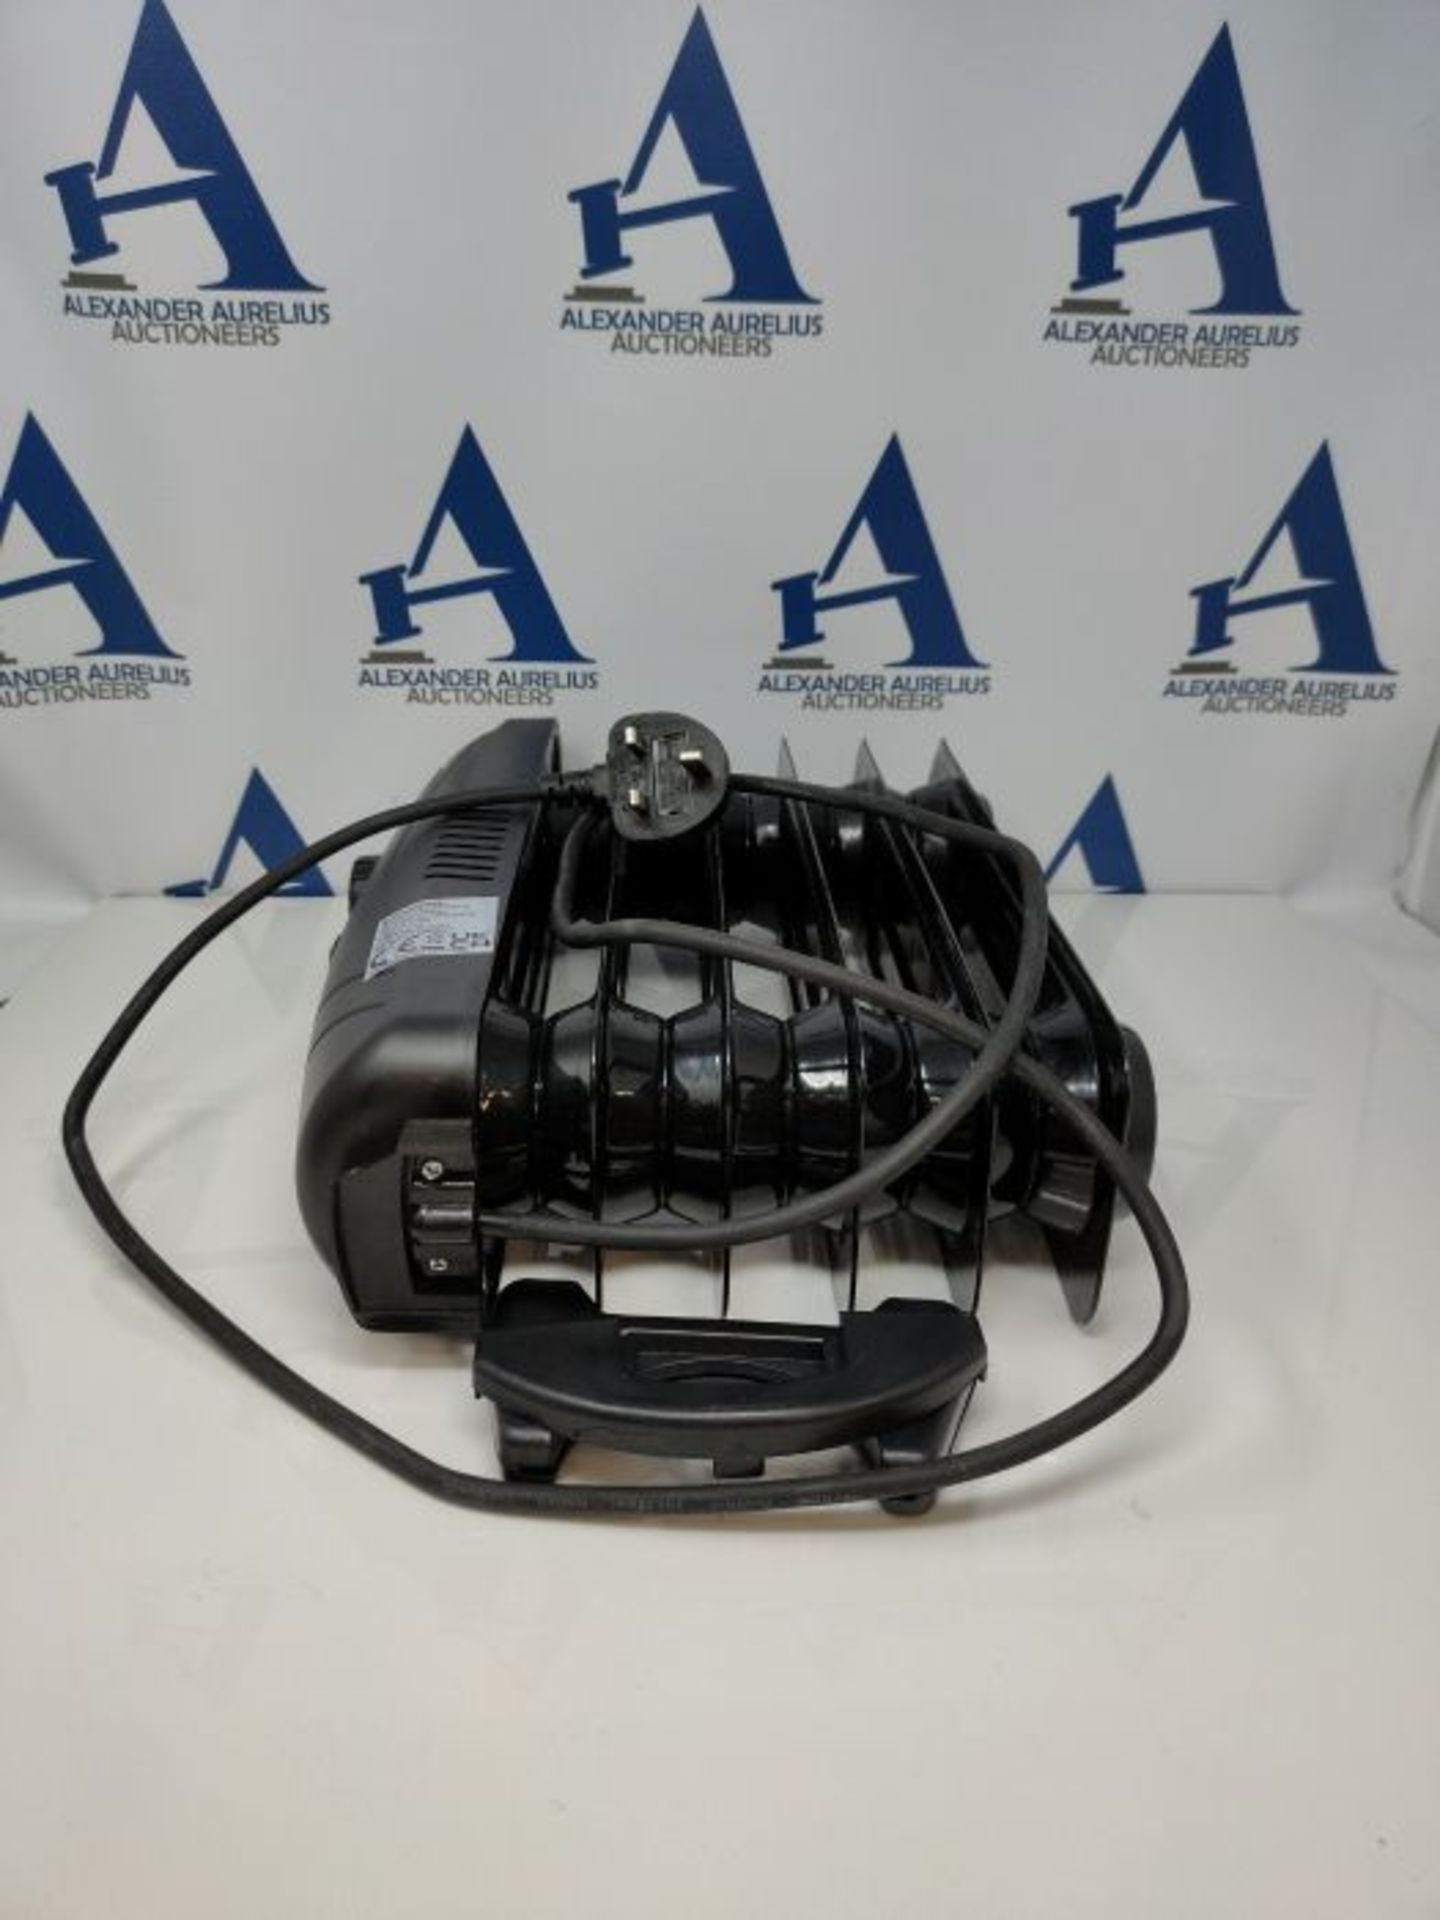 Schallen Black Portable Electric Slim Oil Filled Radiator Heater with Adjustable Tempe - Image 2 of 2